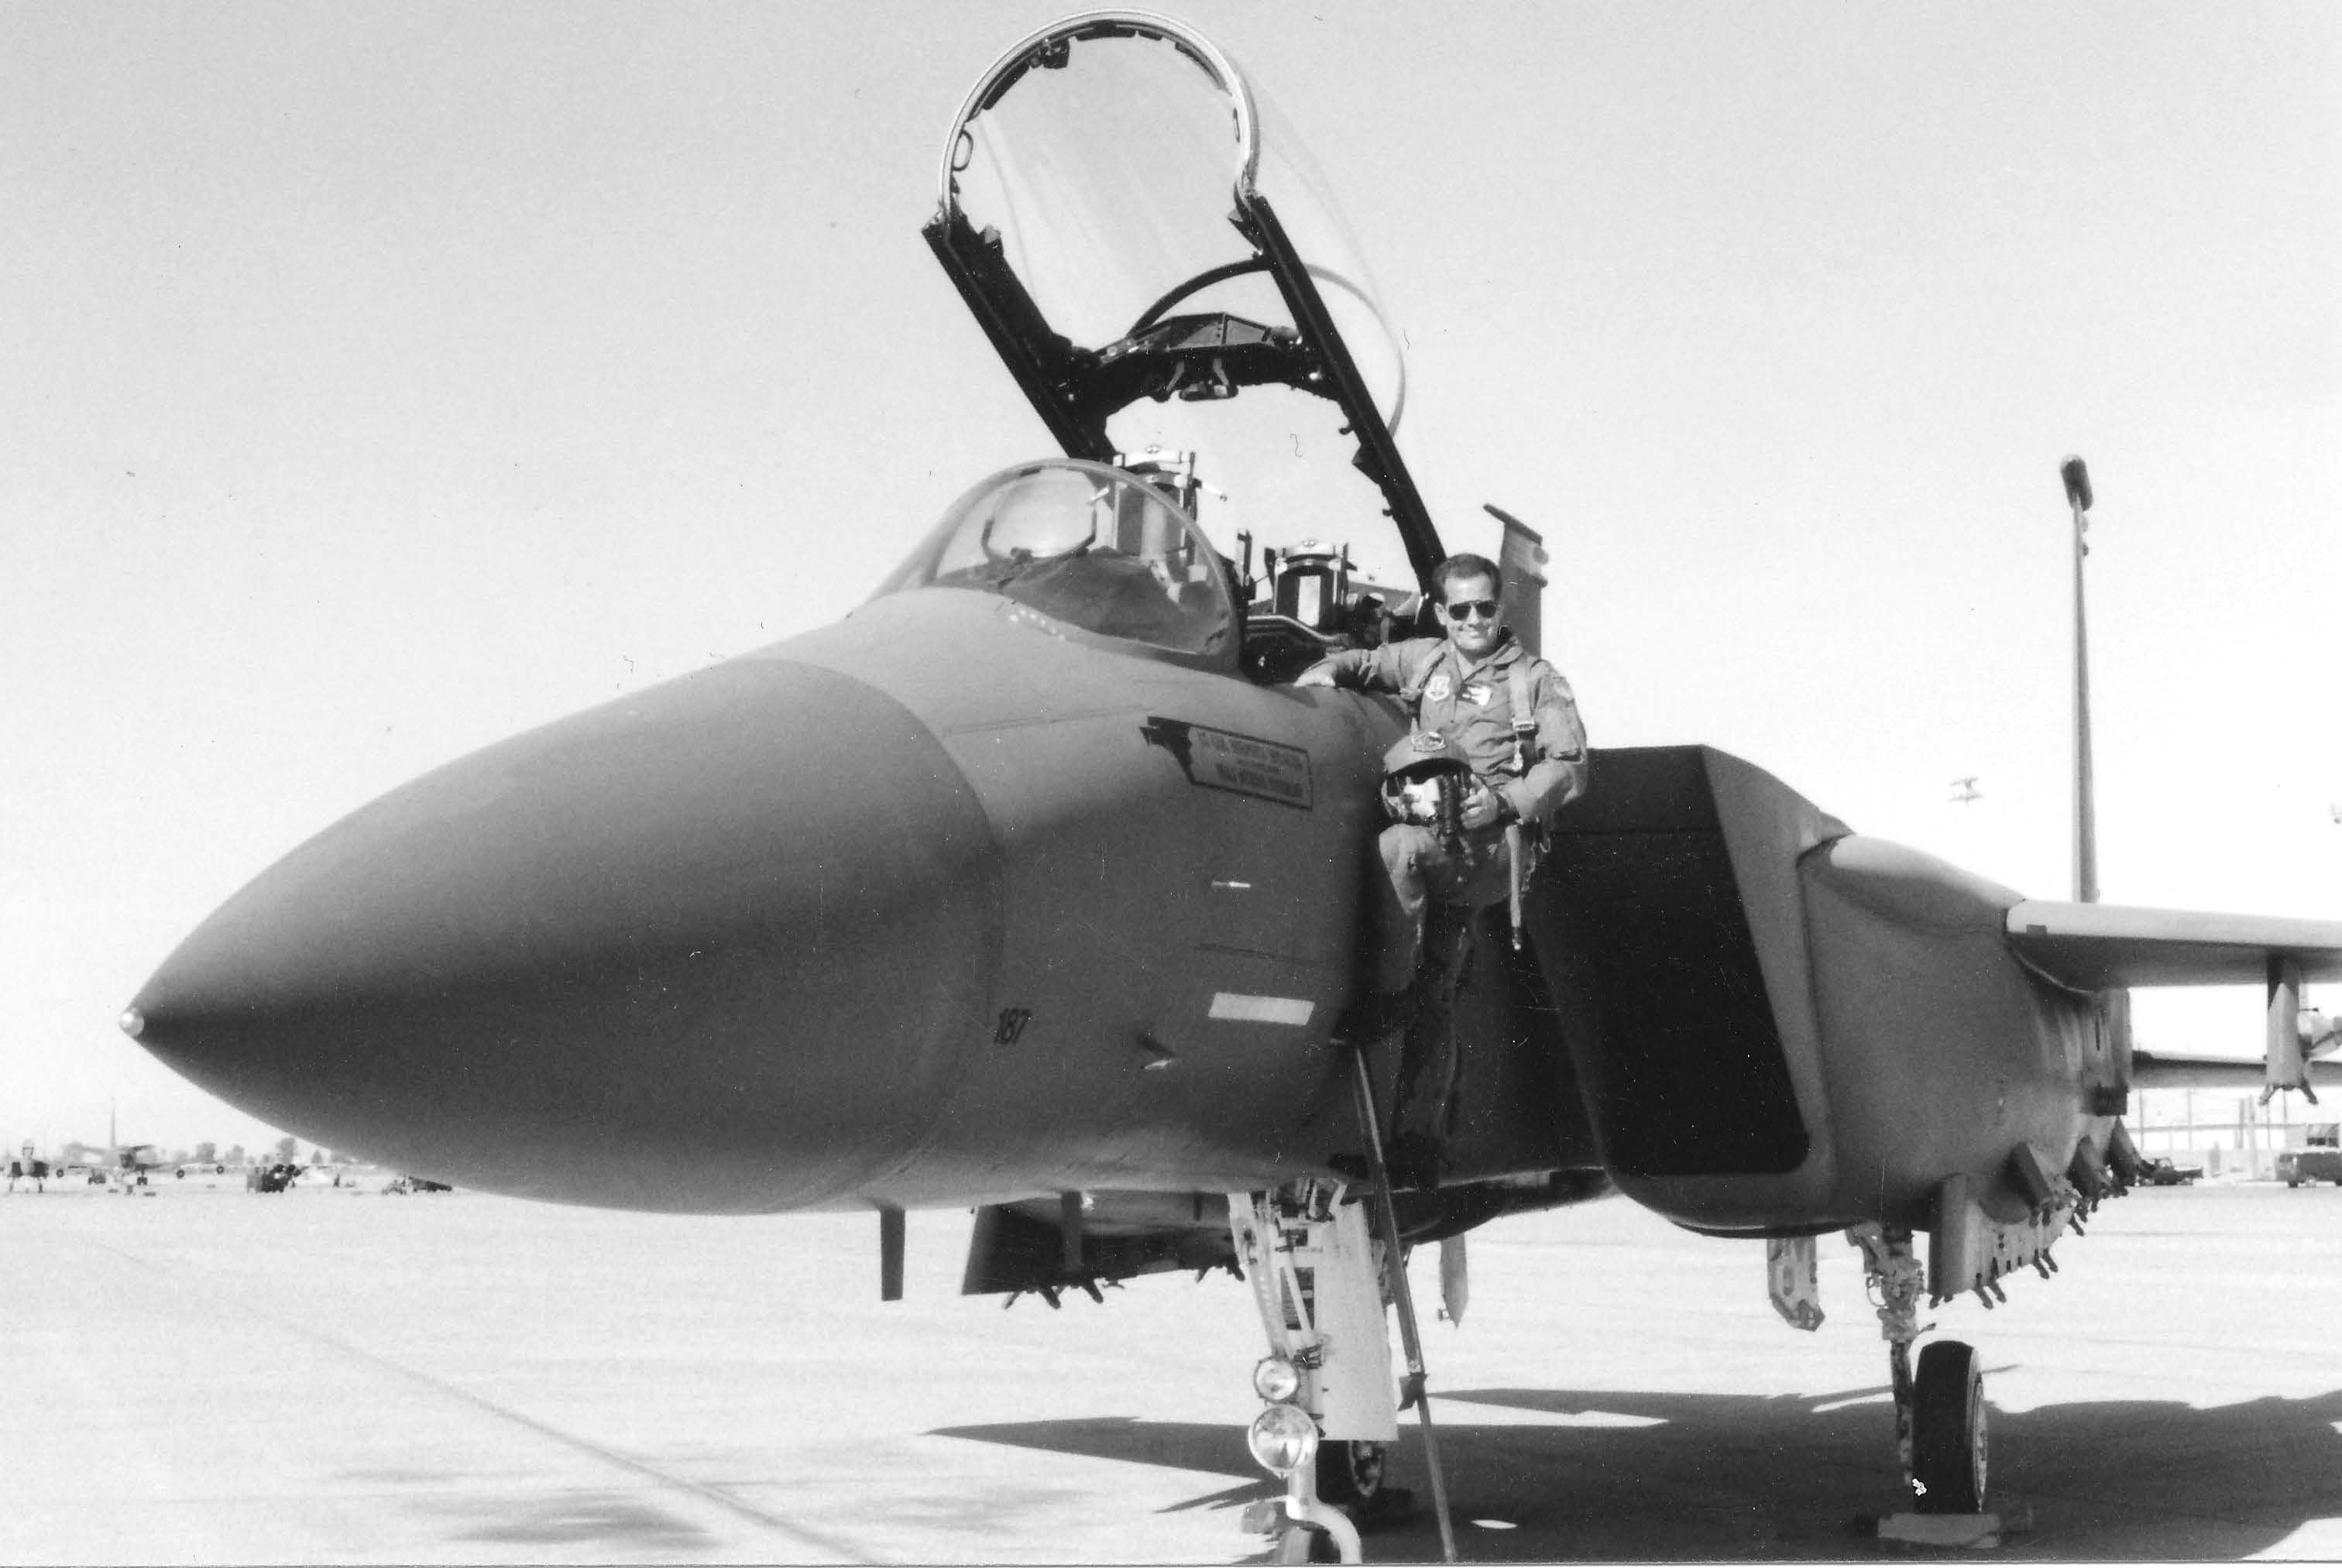 Captain Brent Johnson training on the new F-15E Strike Eagle at Luke AFB, Arizona, in August 1991. Courtesy of Brent Johnson.